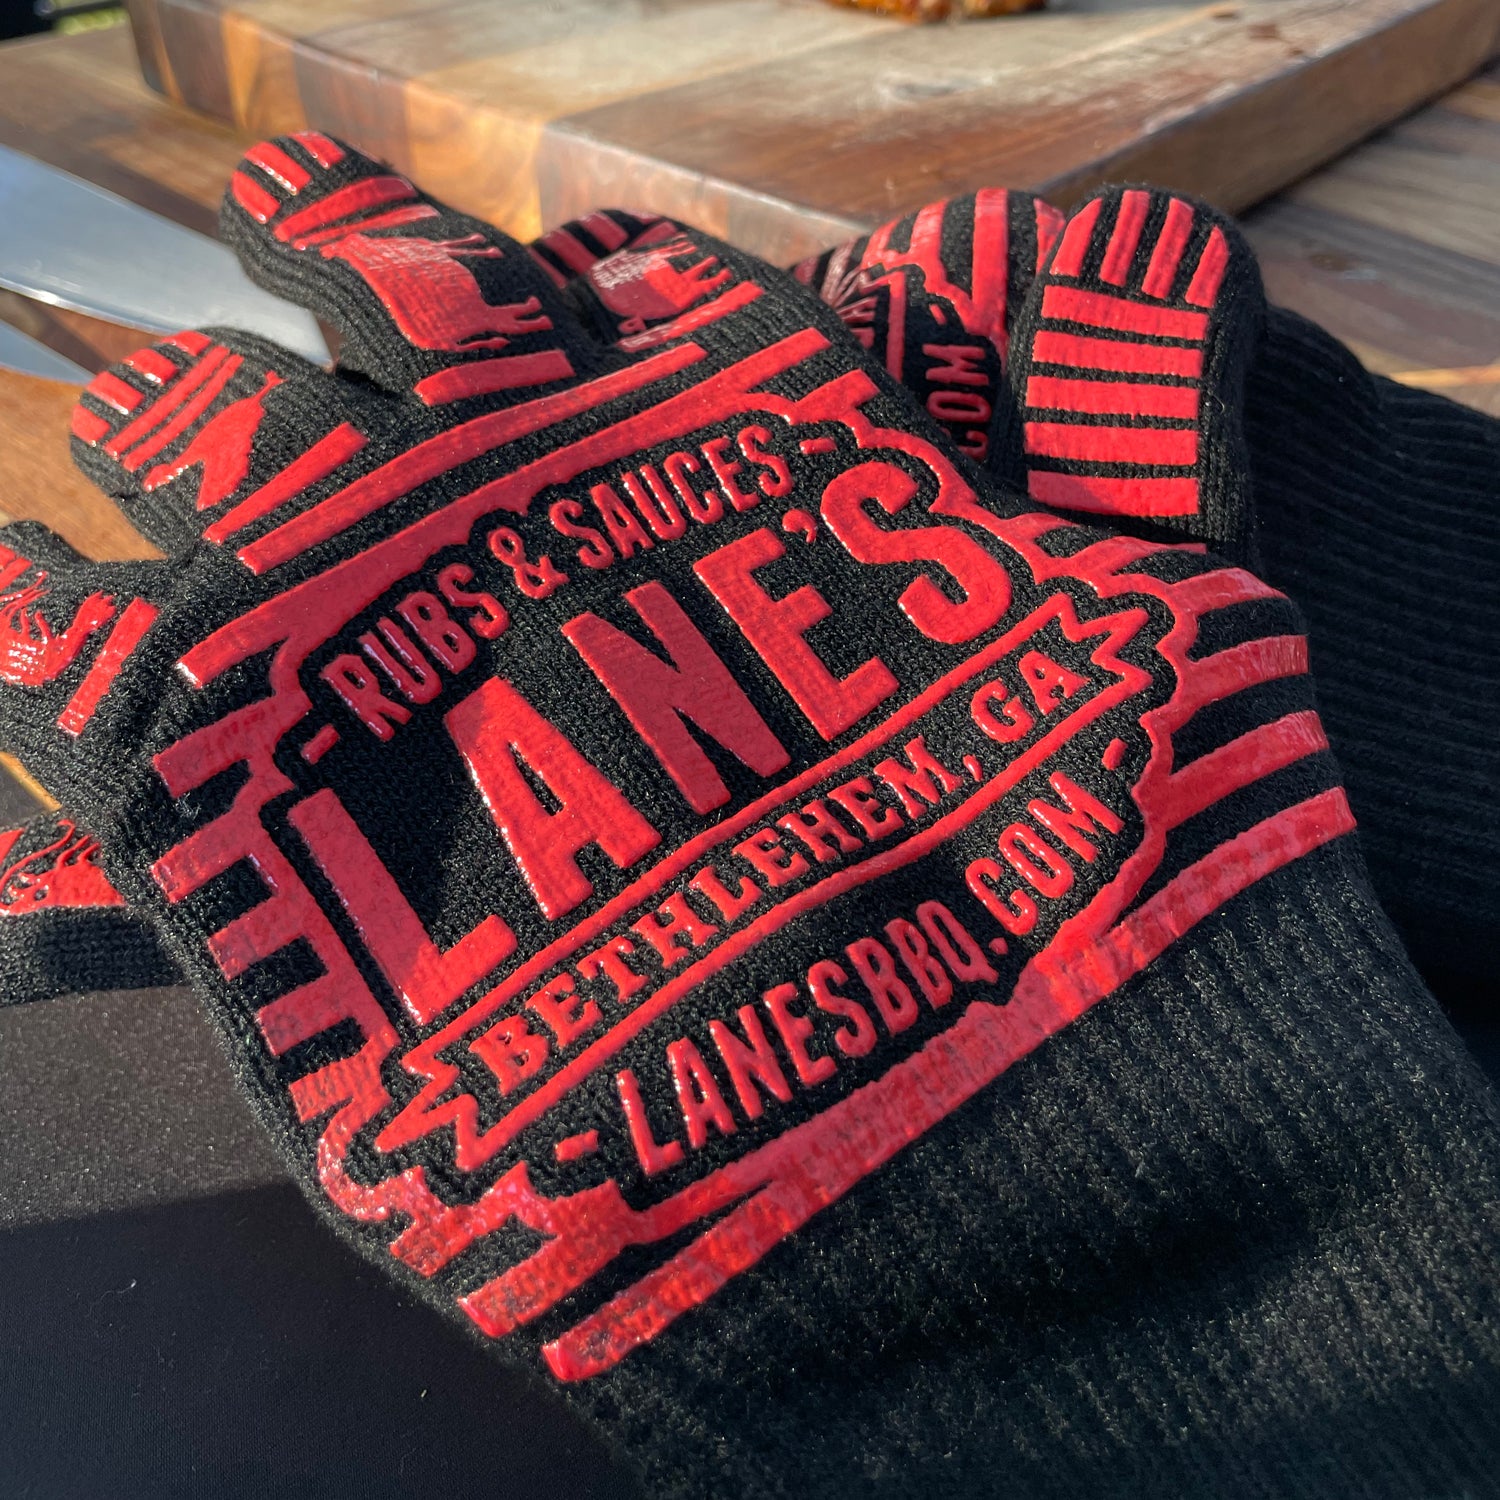 Lane's Heat Resistant Grilling Gloves